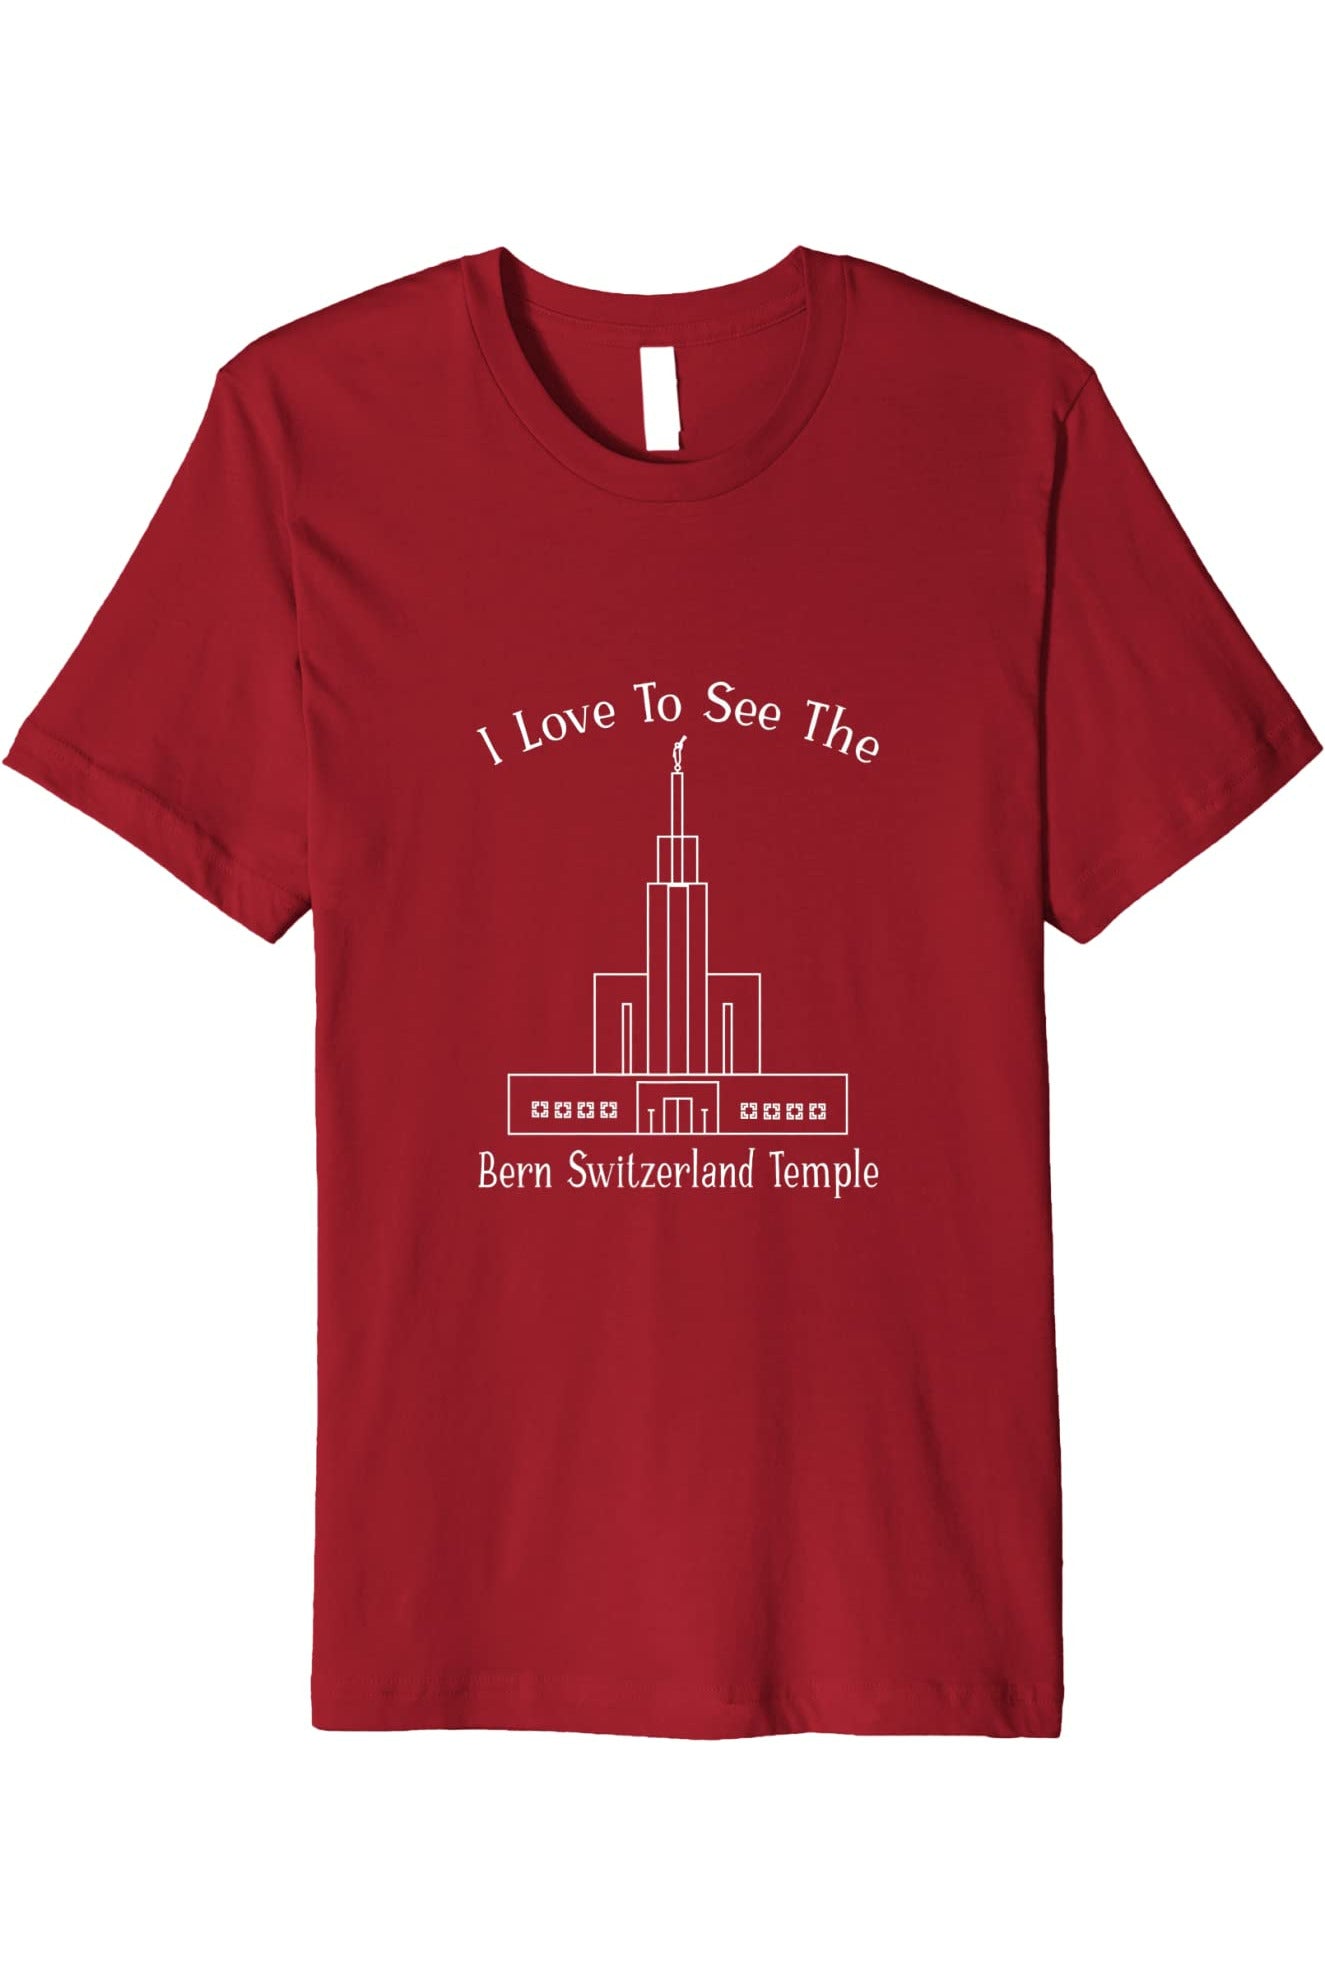 Bern Switzerland Temple T-Shirt - Premium - Happy Style (English) US